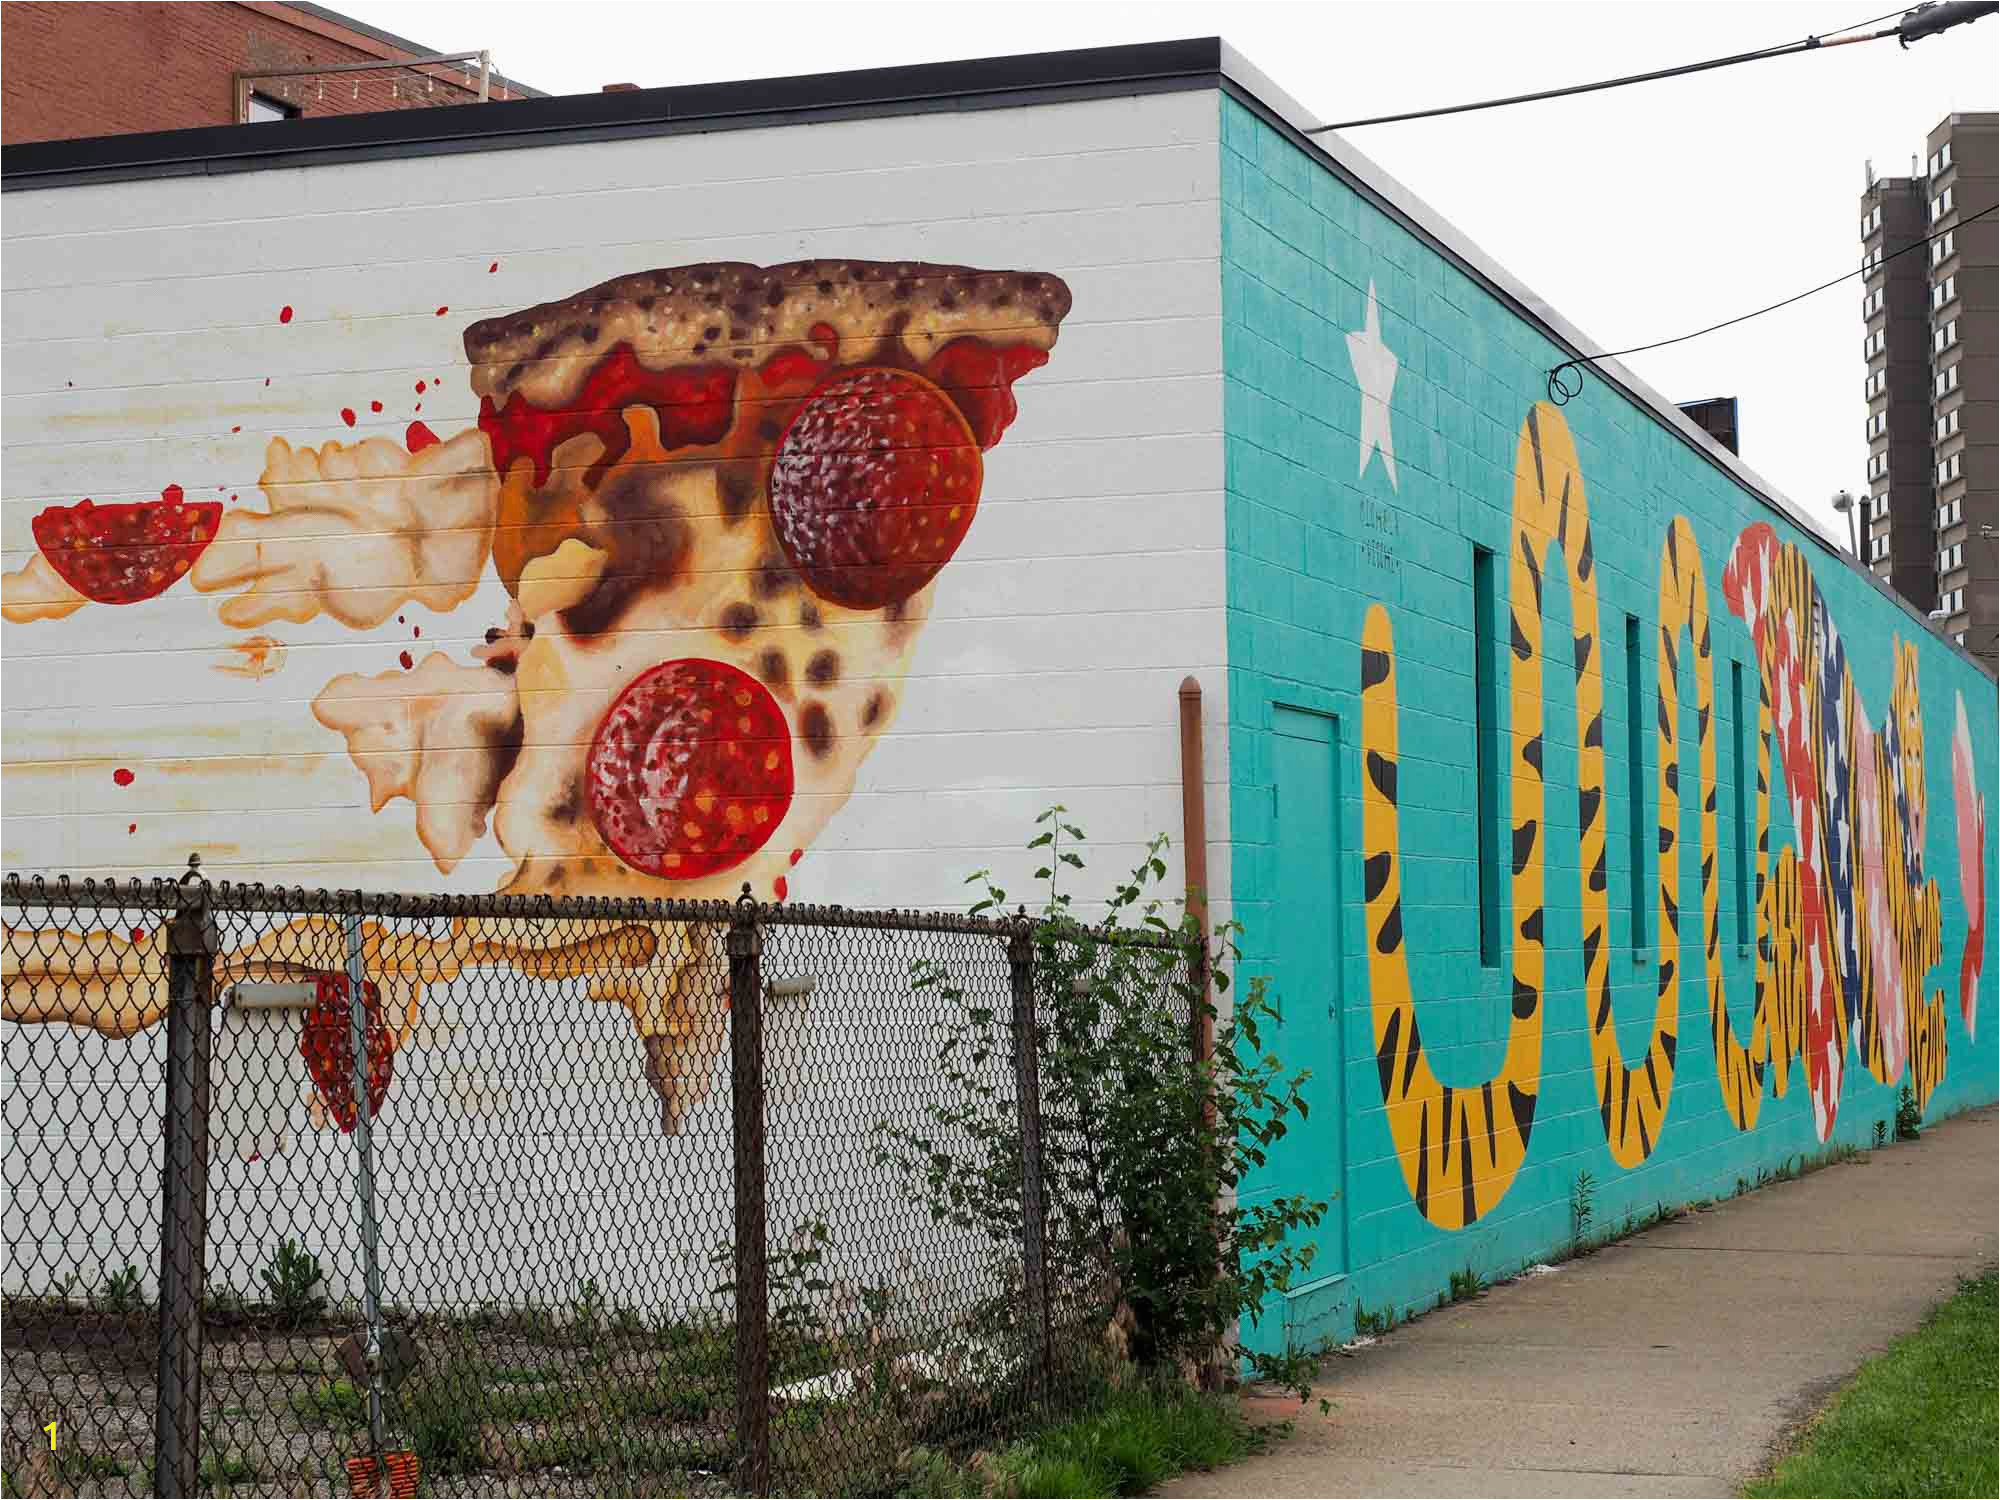 Mural Walls Near Me Cleveland Street Art Guide the Best Murals In Cleveland